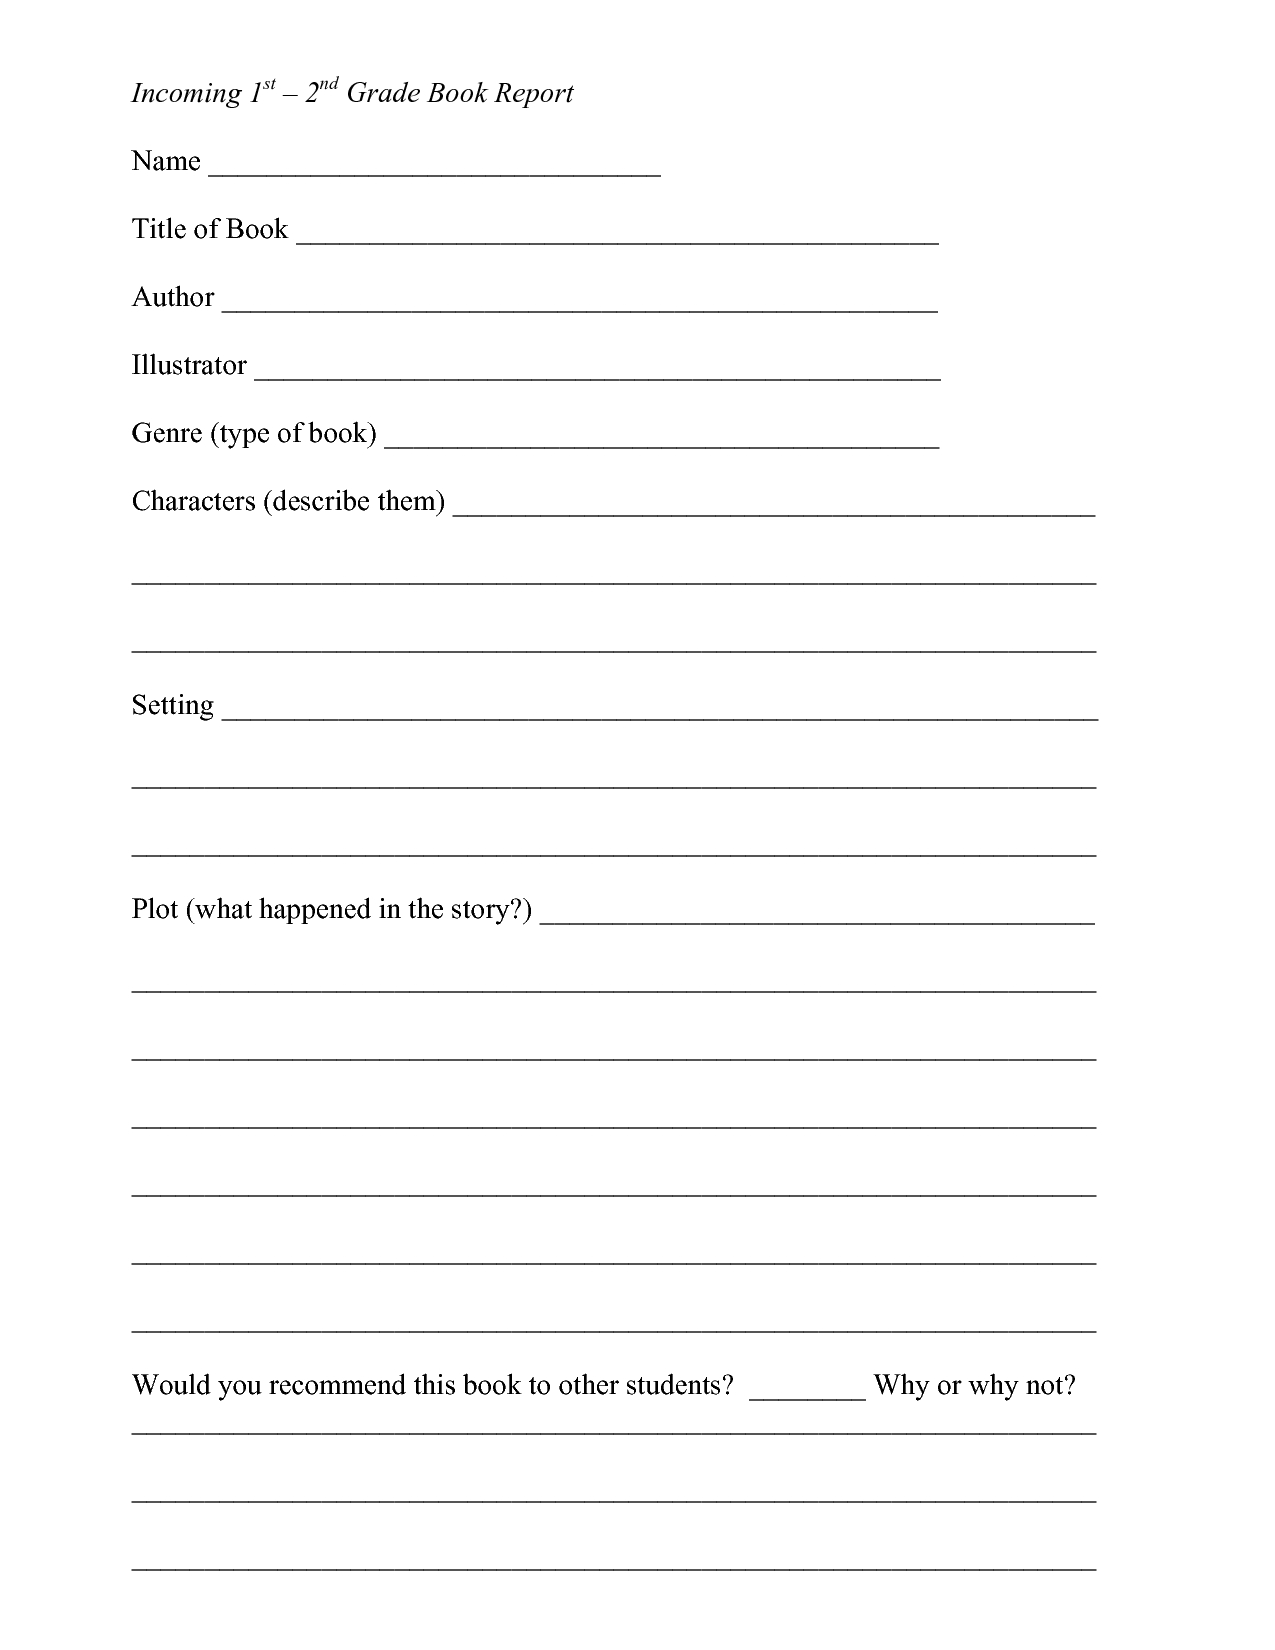 Book Report Template 2Nd Grade Free – Book Report Form Inside 2Nd Grade Book Report Template